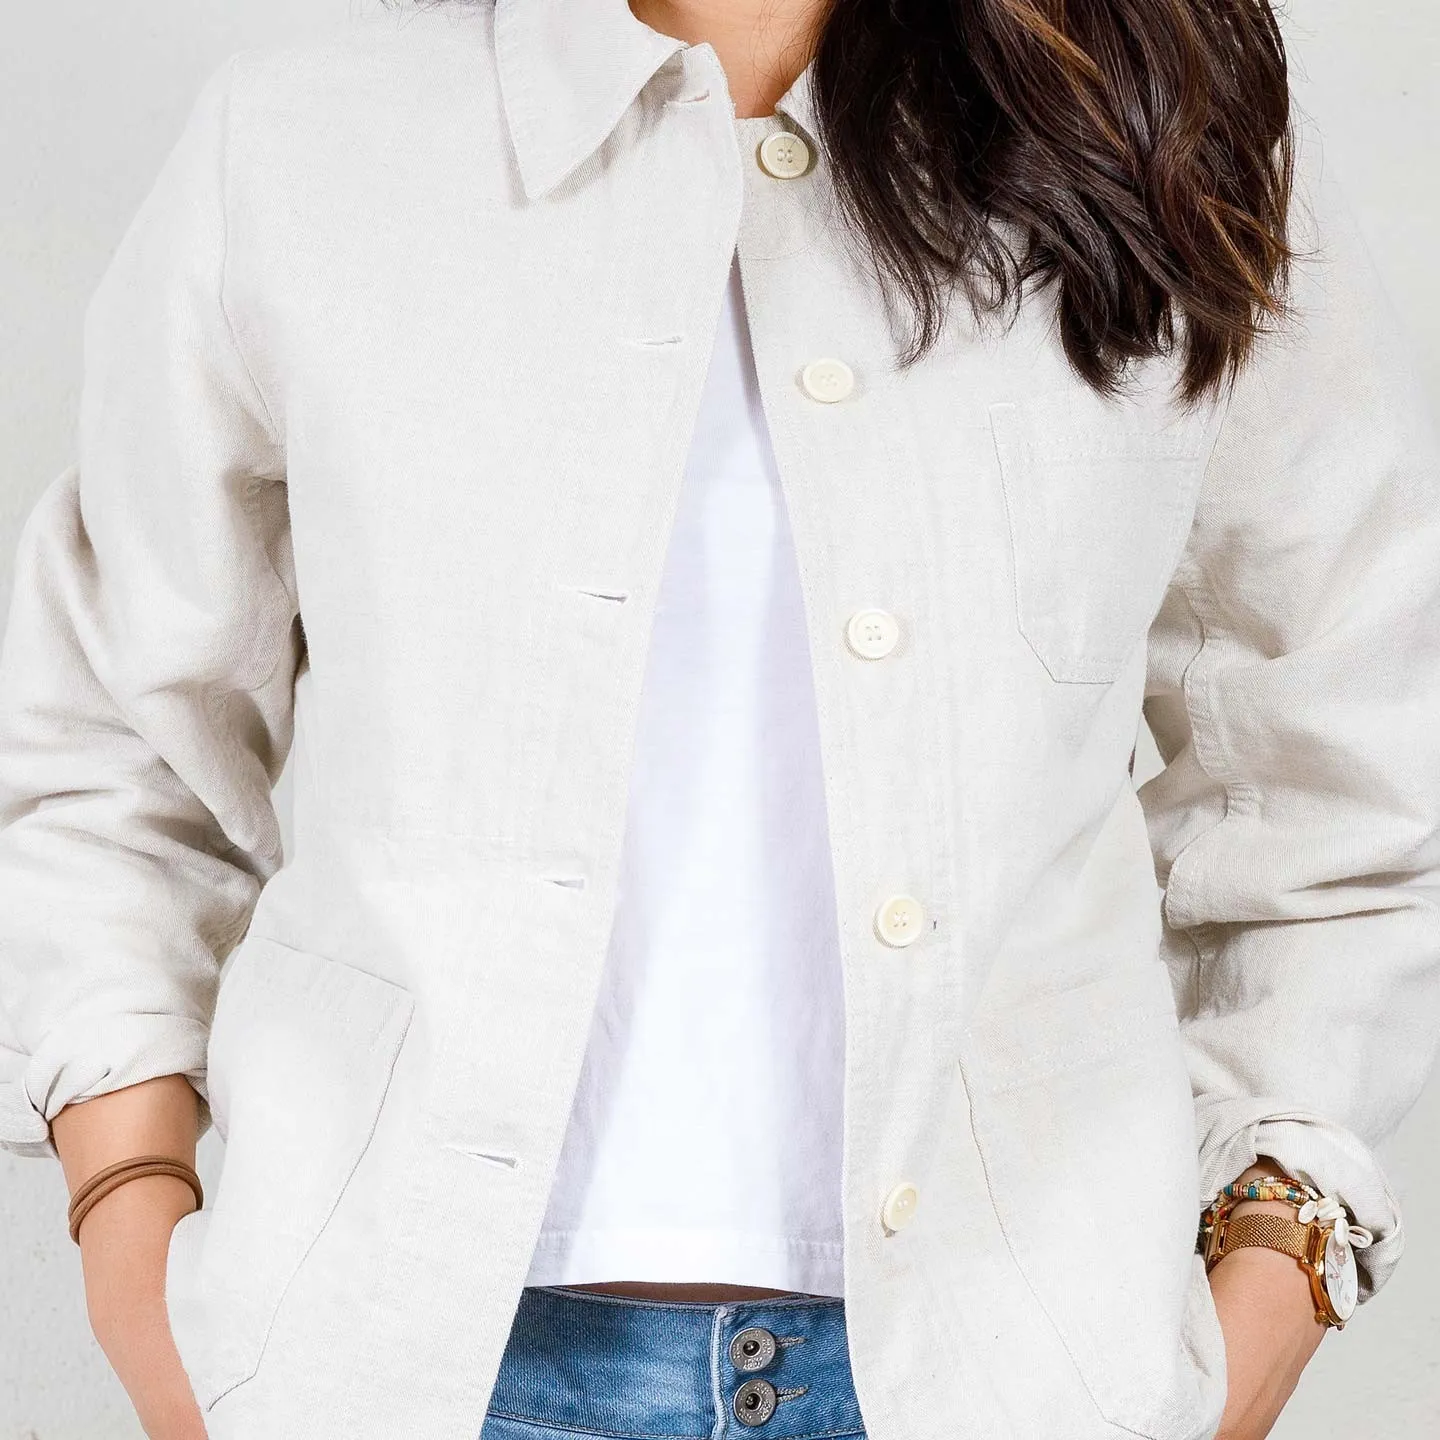 100% Organic Cotton twill ladies' workwear jacket / A L'O - 1905